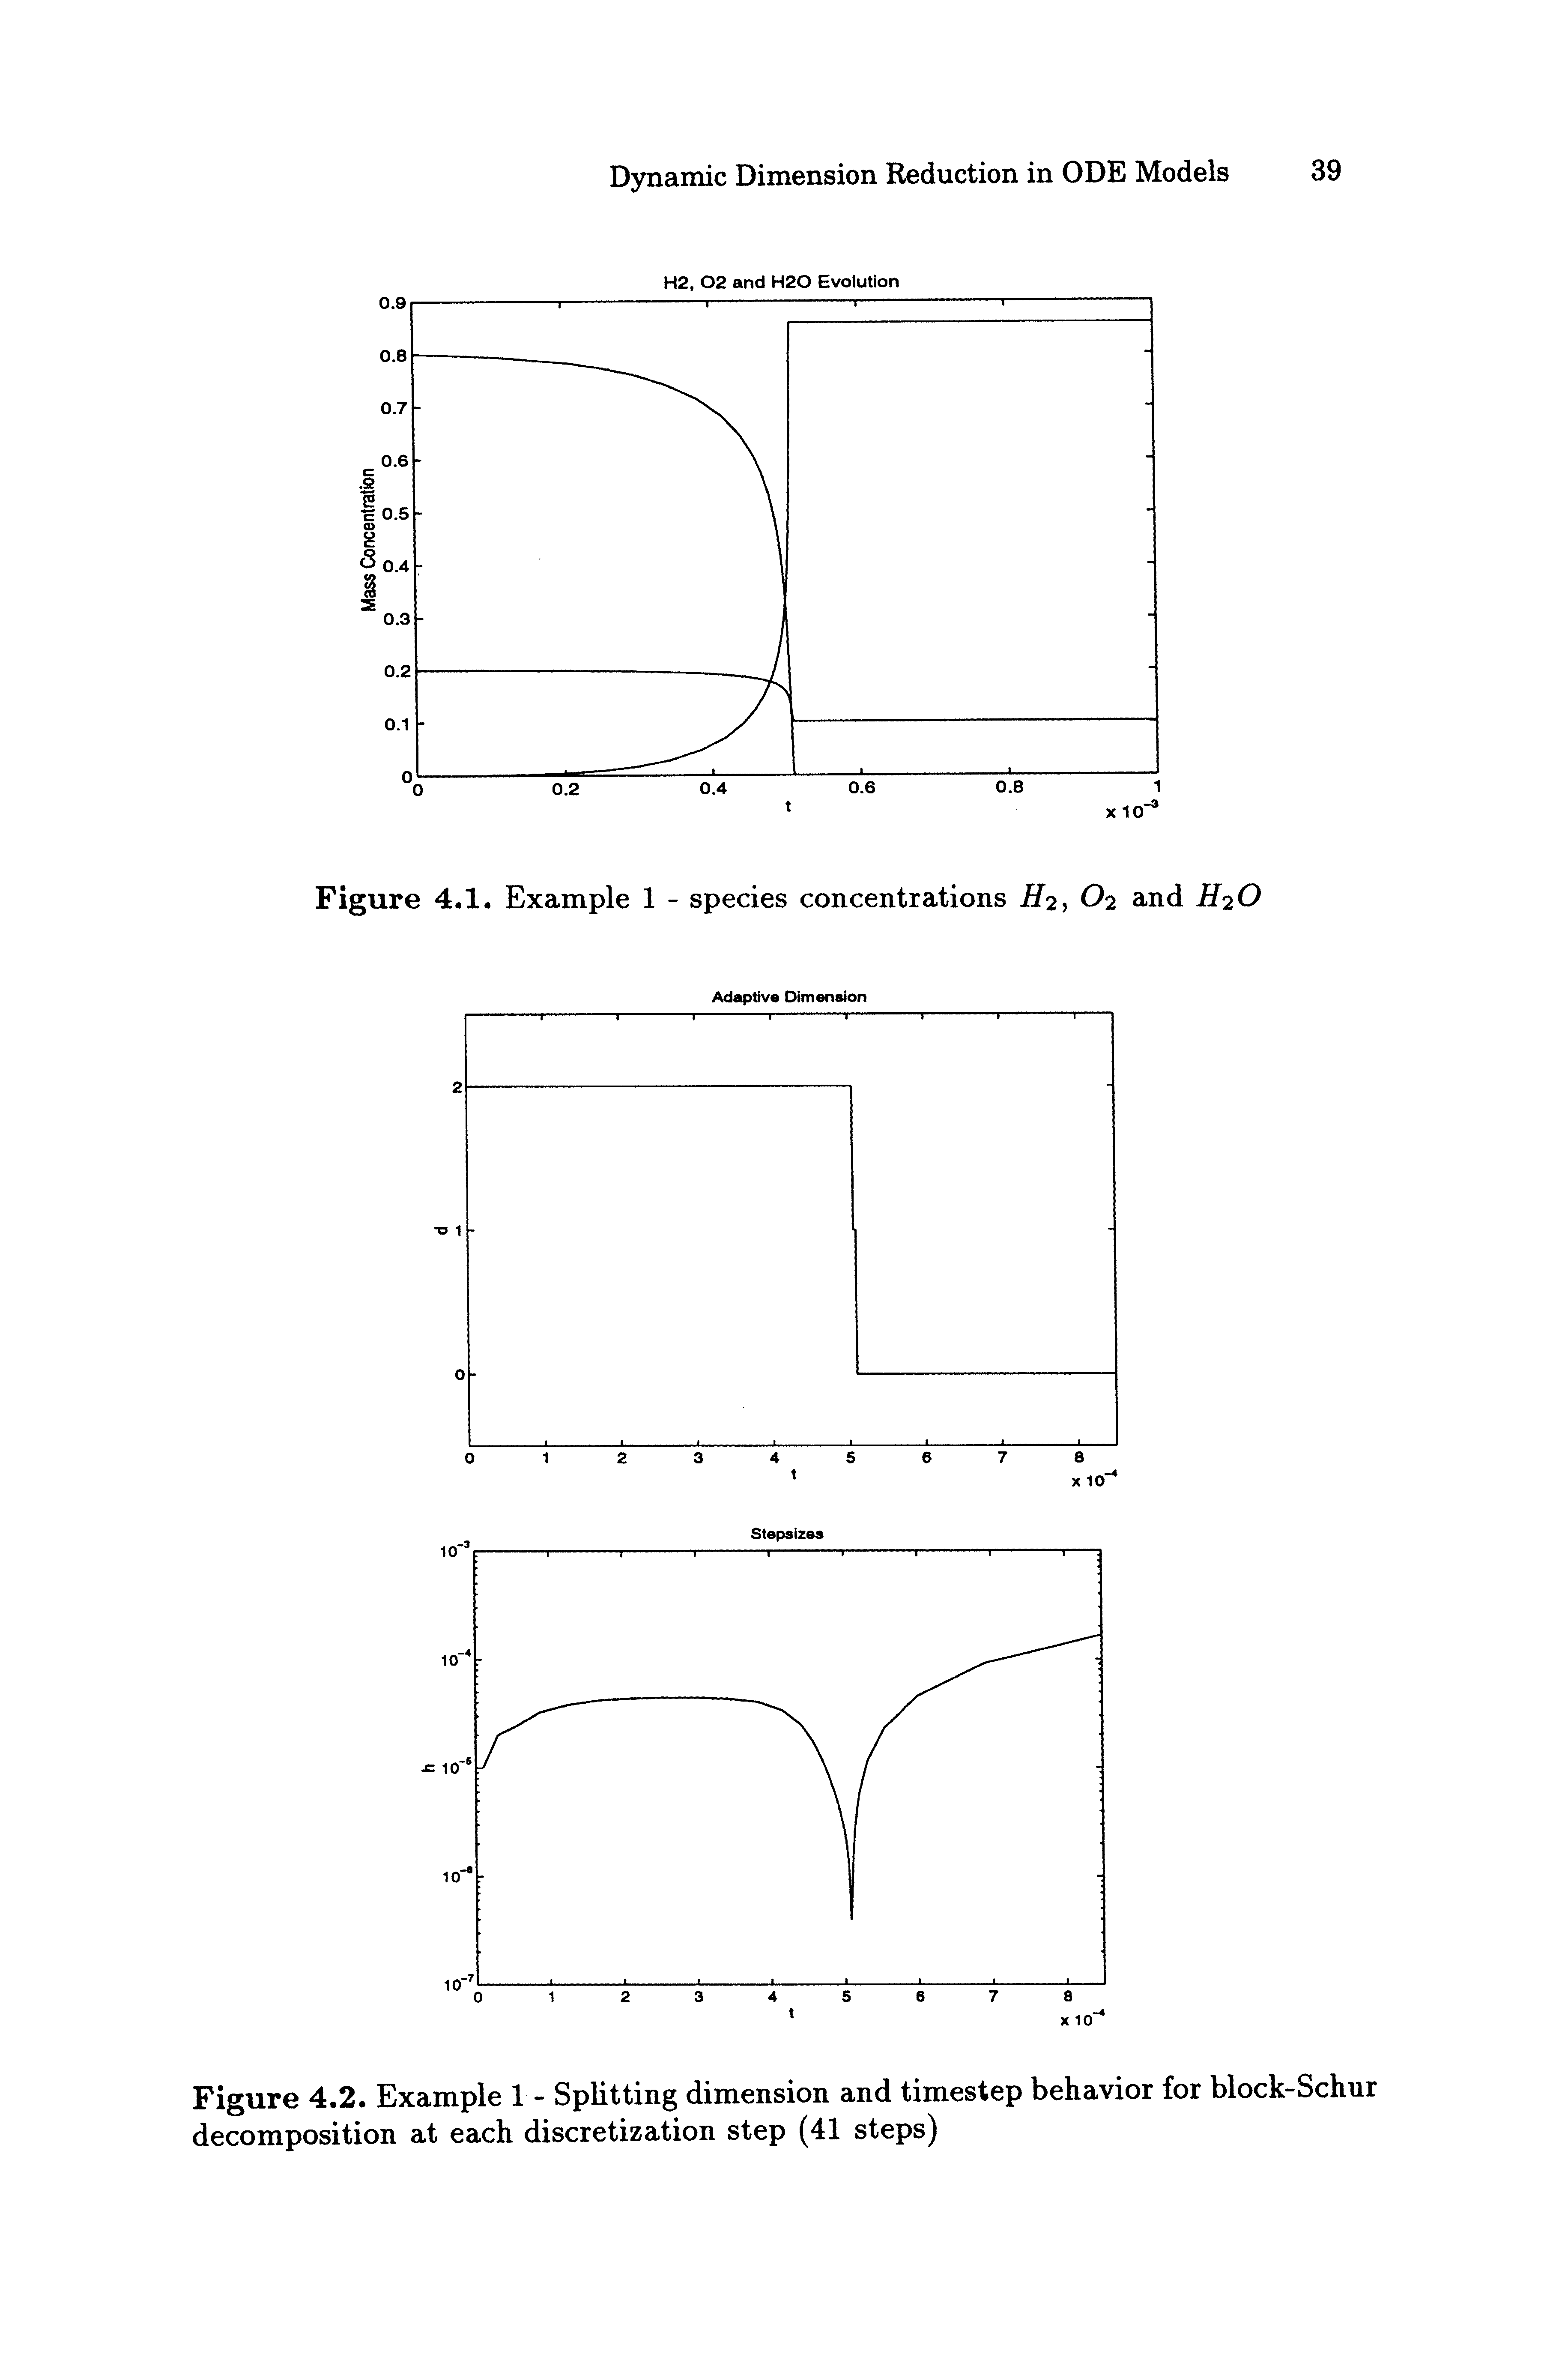 Figure 4.2. Example 1 - Splitting dimension and timestep behavior for block-Schur decomposition at each discretization step (41 steps)...